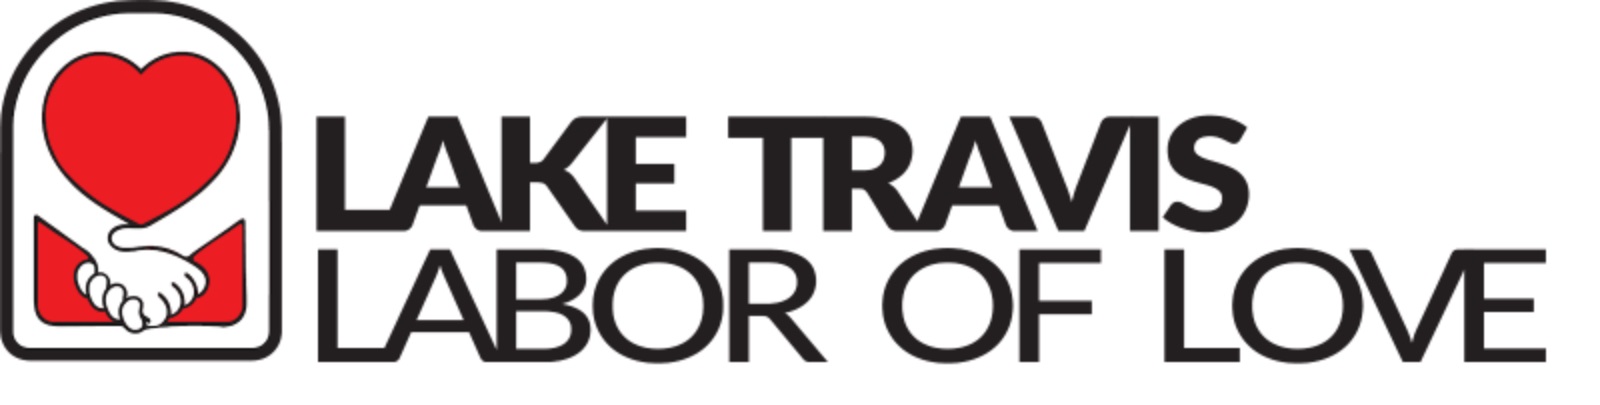 Lake Travis Labor of Love logo